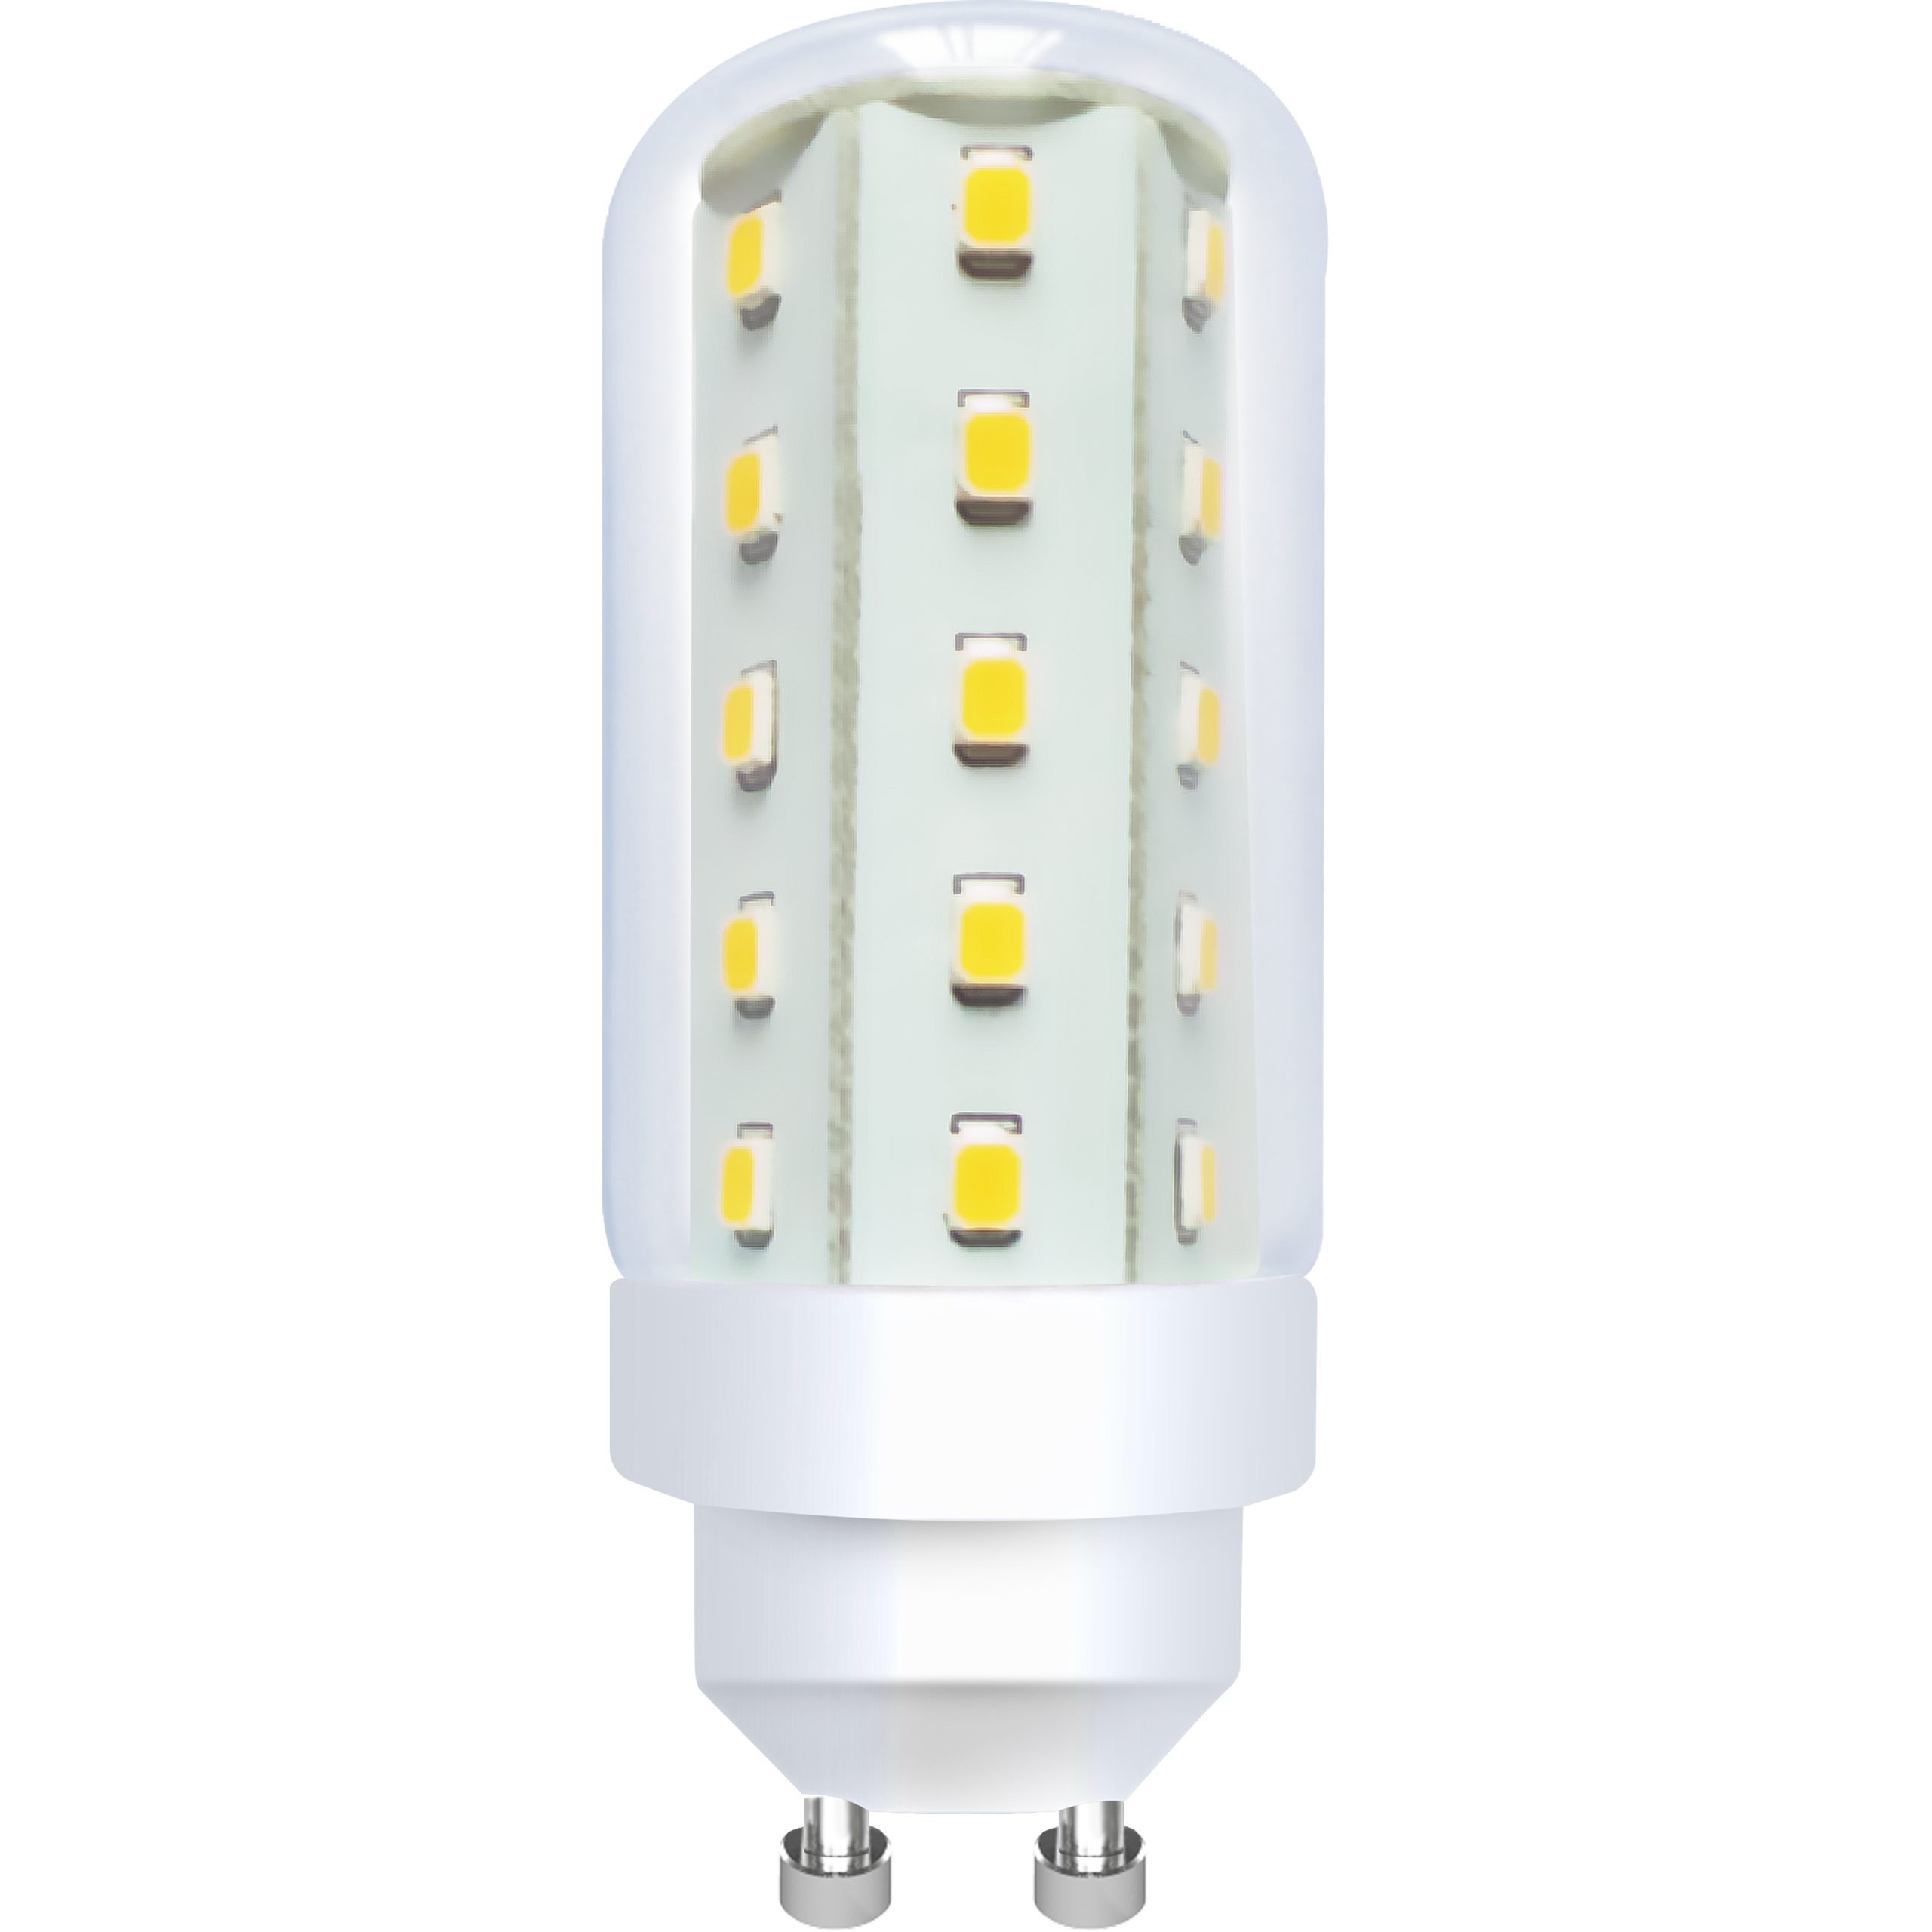 LED light Klar 0620202 LED's Farbwiedergabe LED-Leuchtmittel GU10 beste warmweiß 4W CRI97 Kapsel, GU10, T30 für